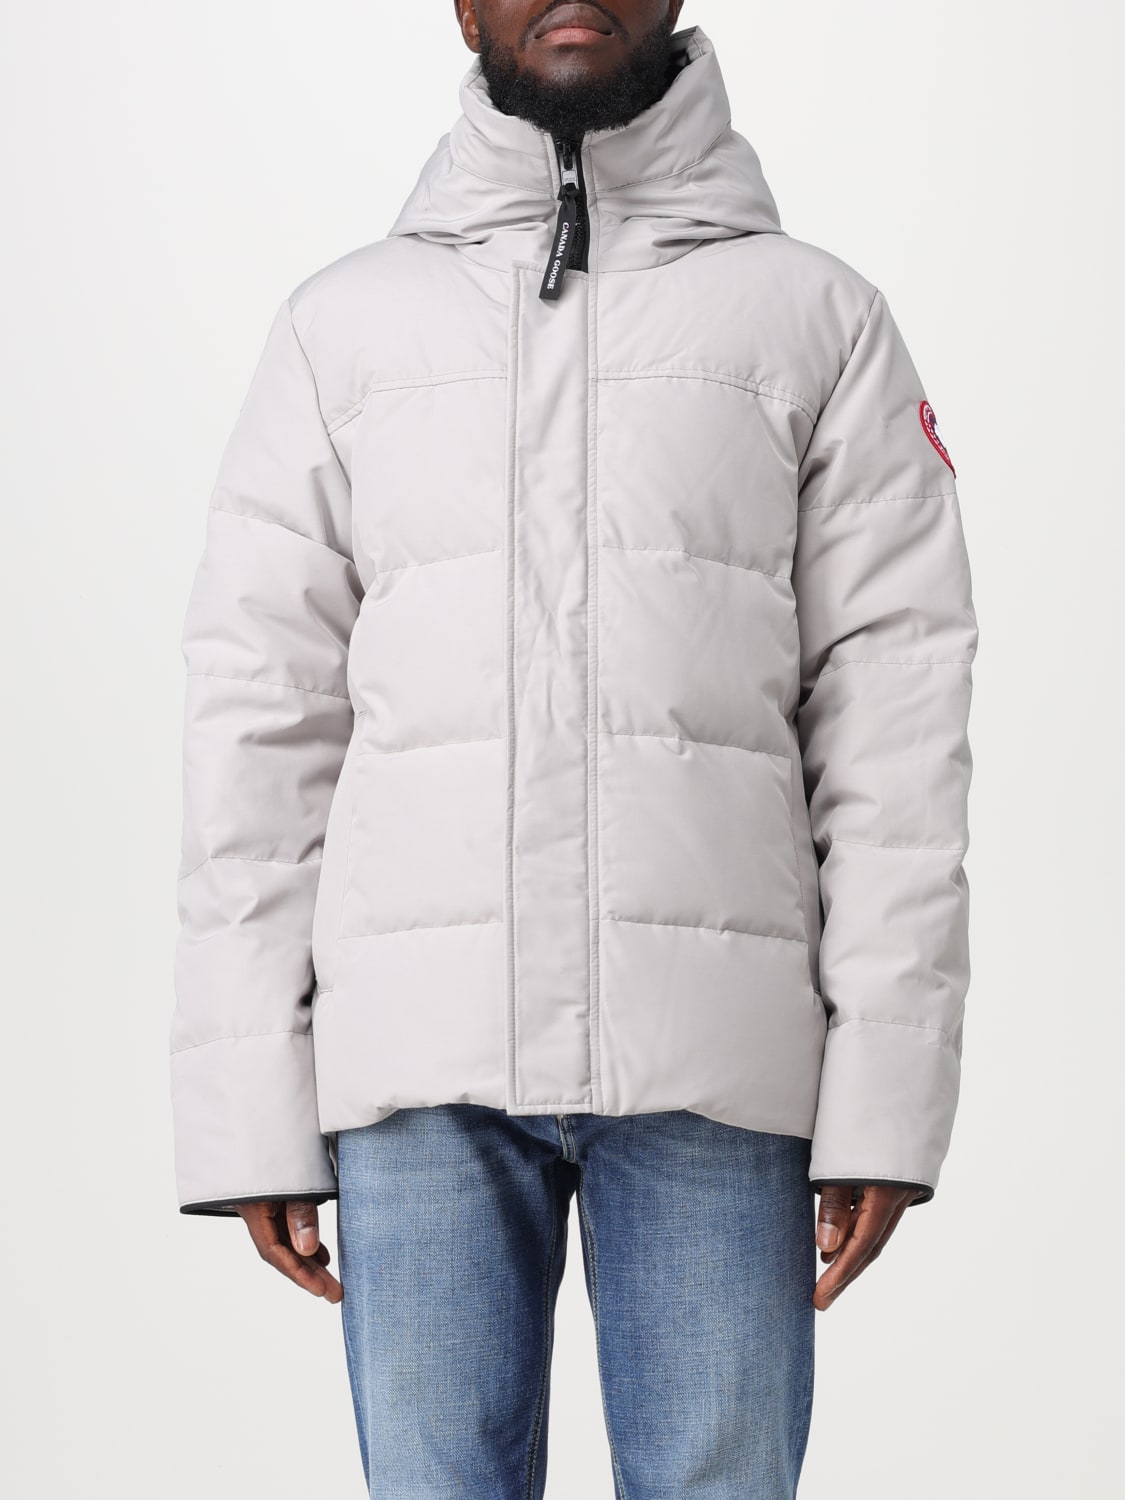 CANADA GOOSE: jacket for man - Grey | Canada Goose jacket 2080M online ...